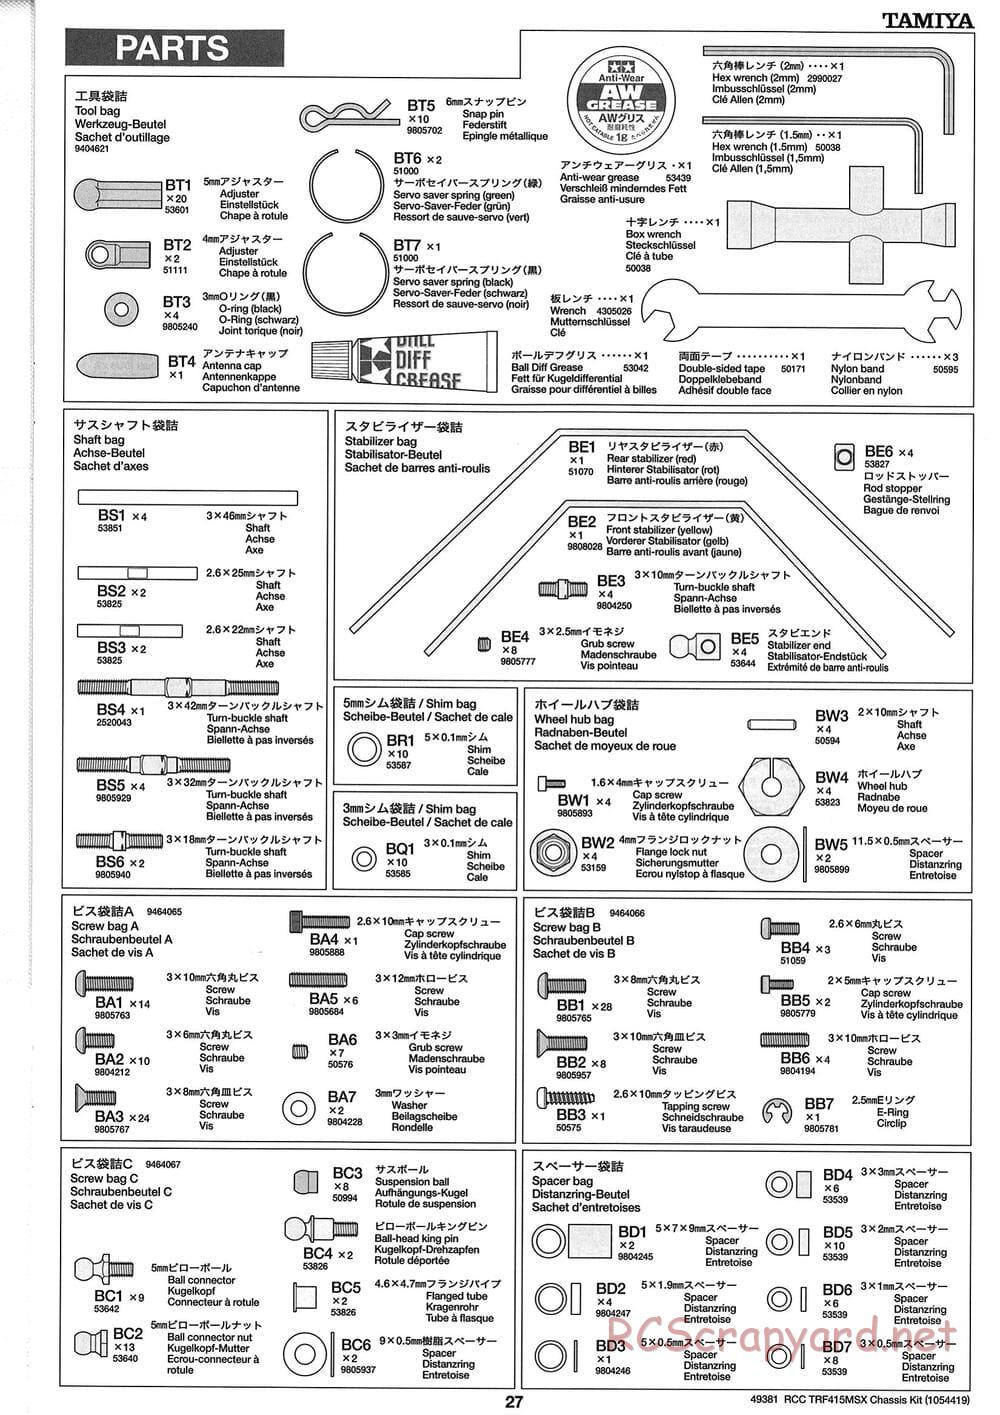 Tamiya - TRF415-MSX Chassis - Manual - Page 27